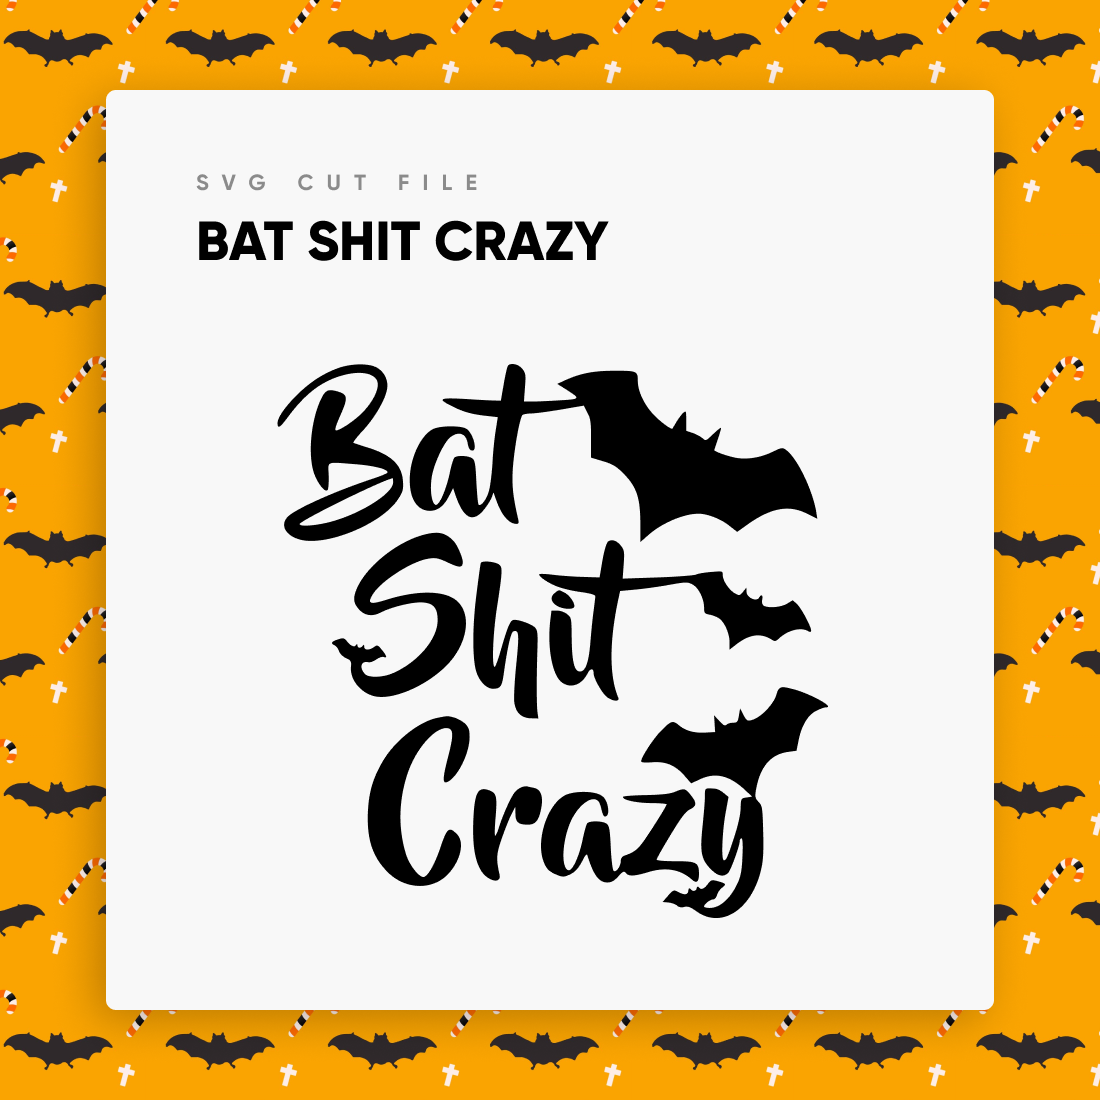 Bat shit crazy svg cut file.